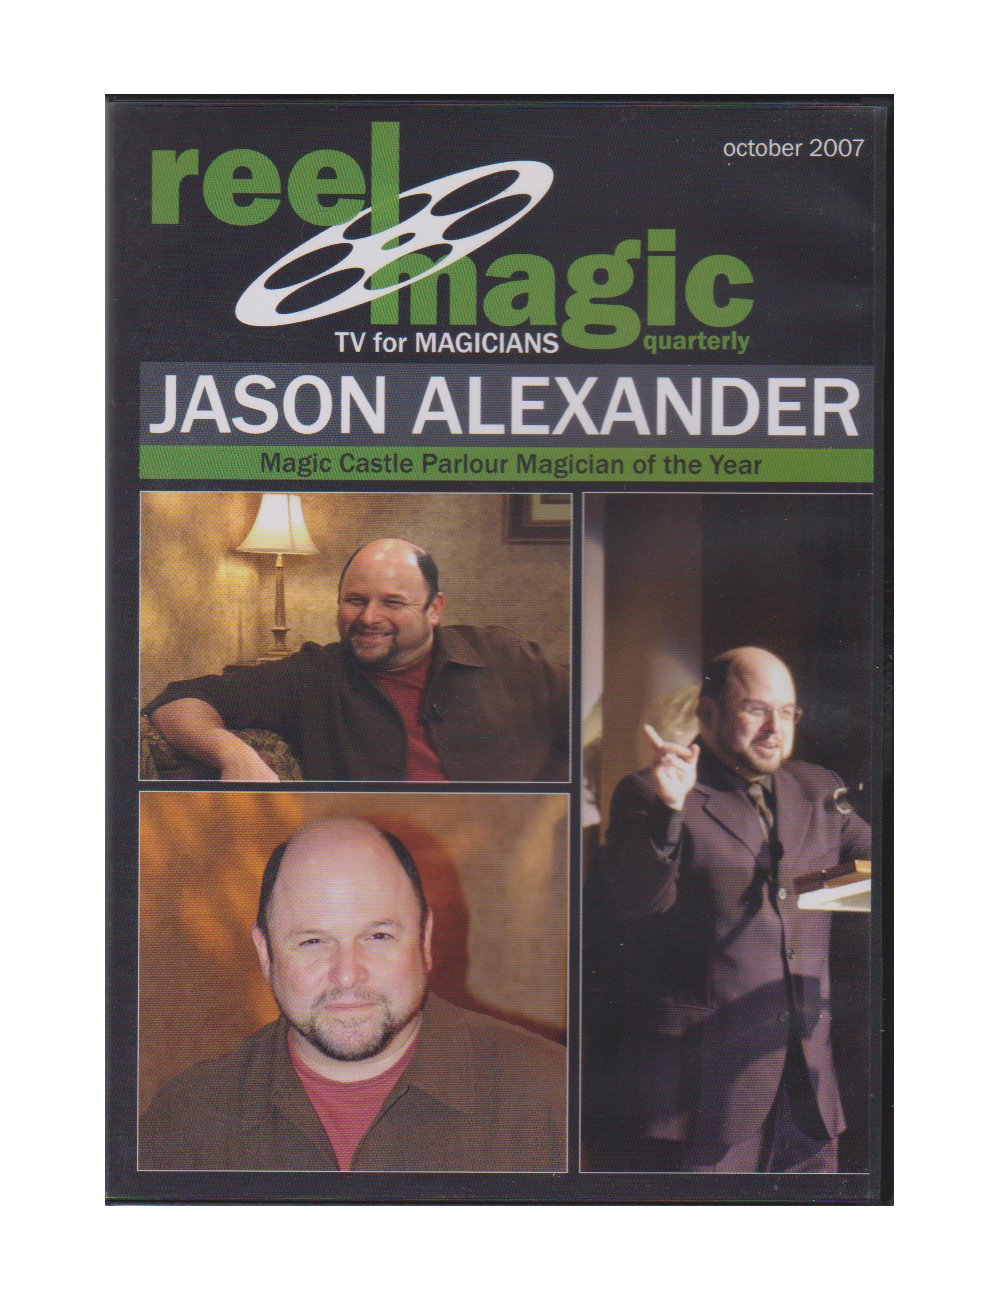 DVD REEL MAGIC QUARTERLY October 2007 JASON ALEXANDER